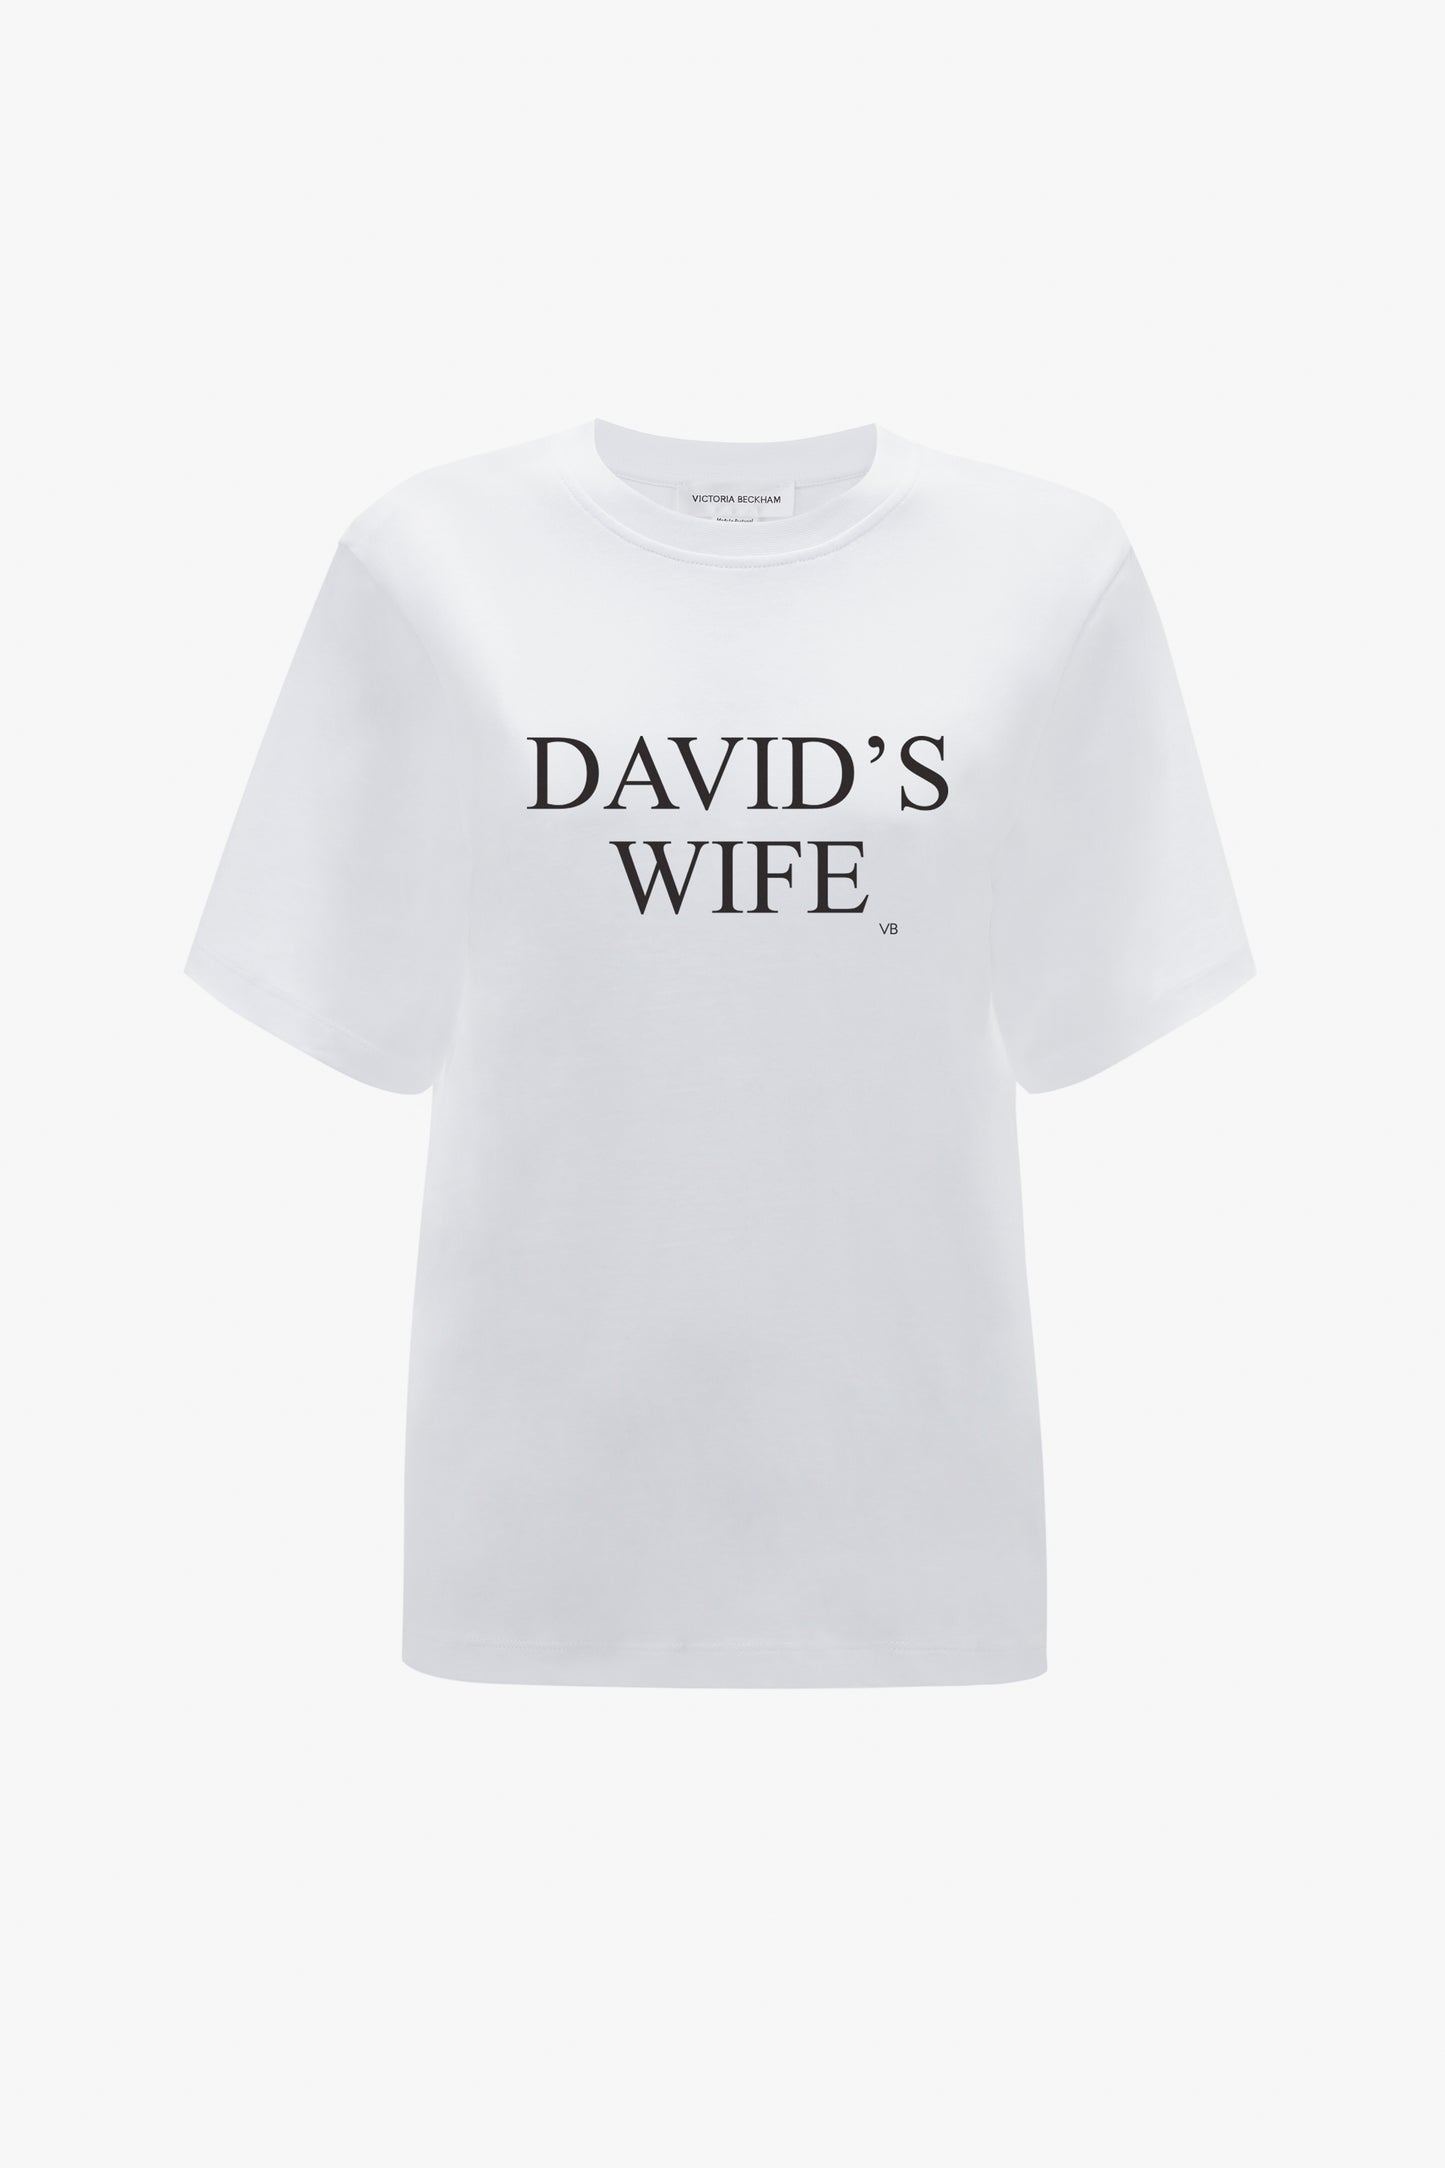 'David's Wife' Slogan T-Shirt In White